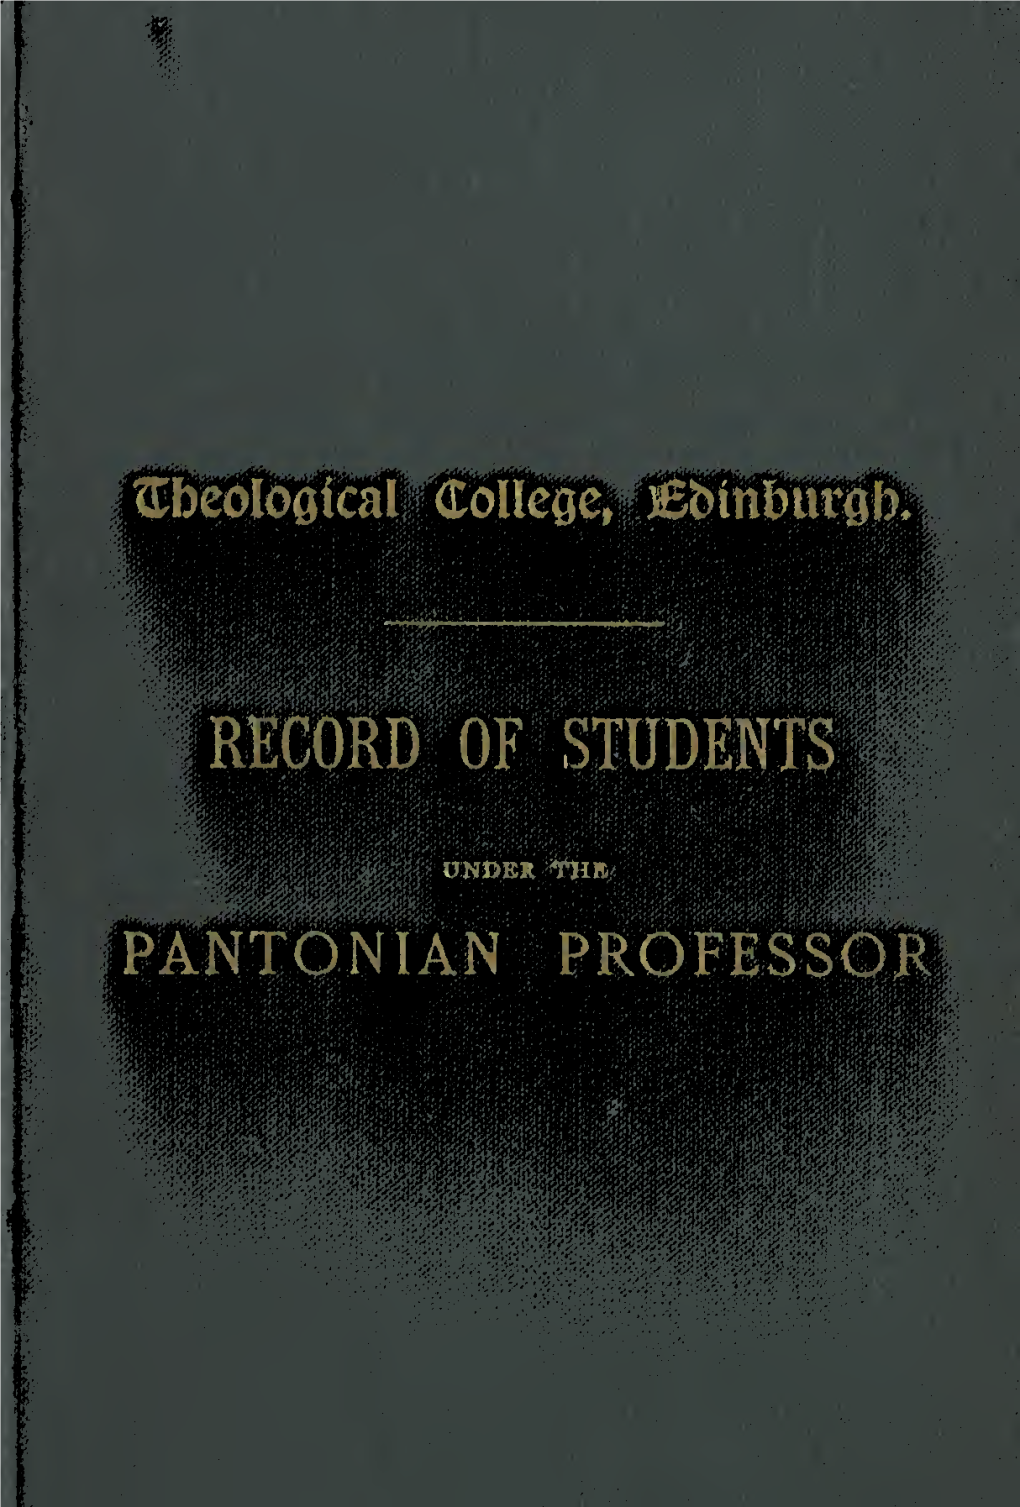 'Dbeolooical Dollcoe, £Binburab. RECORD of STUDENTS UNDER